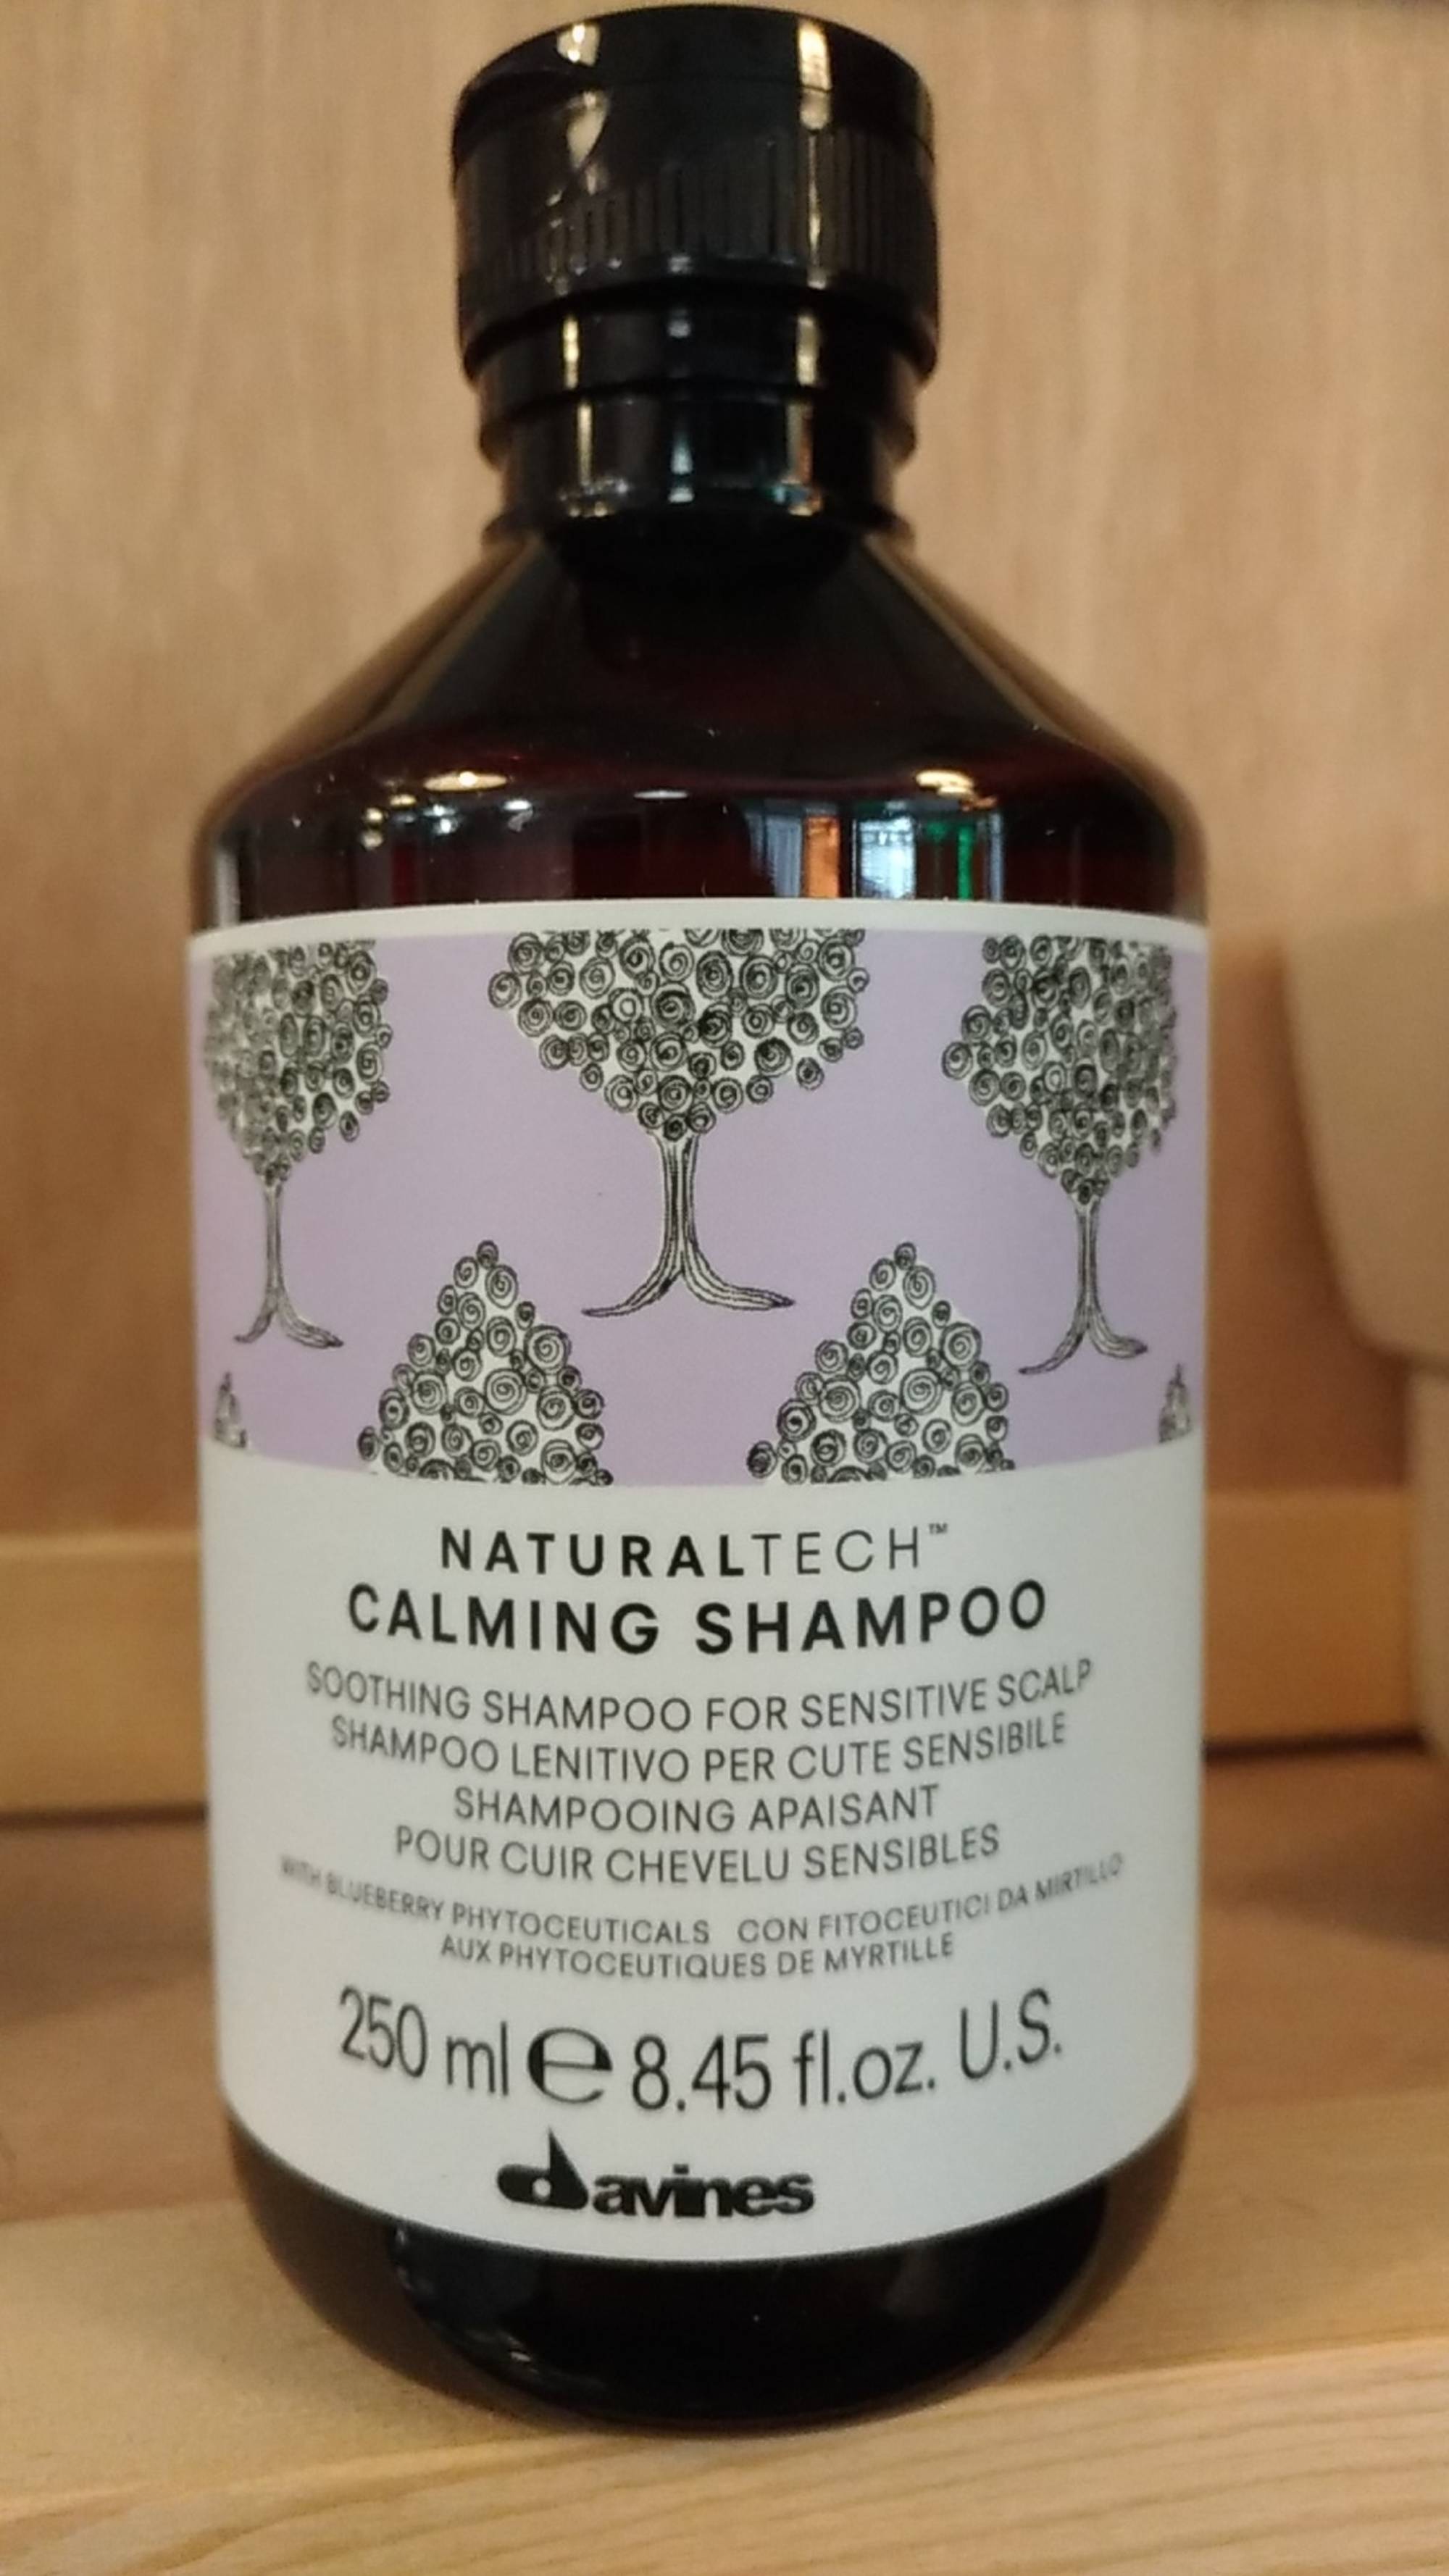 DAVINES - Naturaltech - Calming shampoo